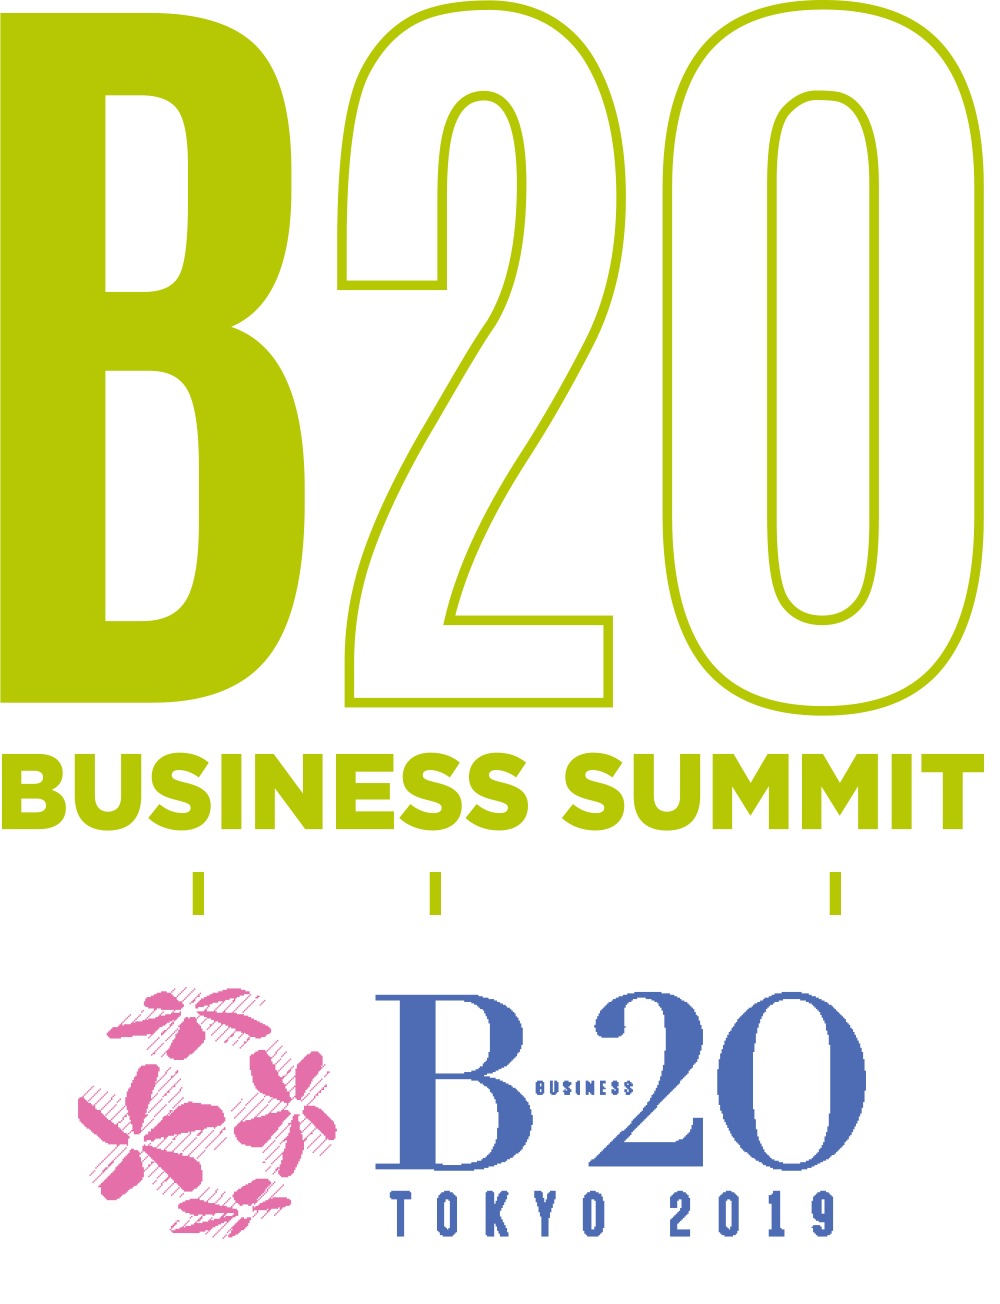 B20 Business Summit Tokyo 2019